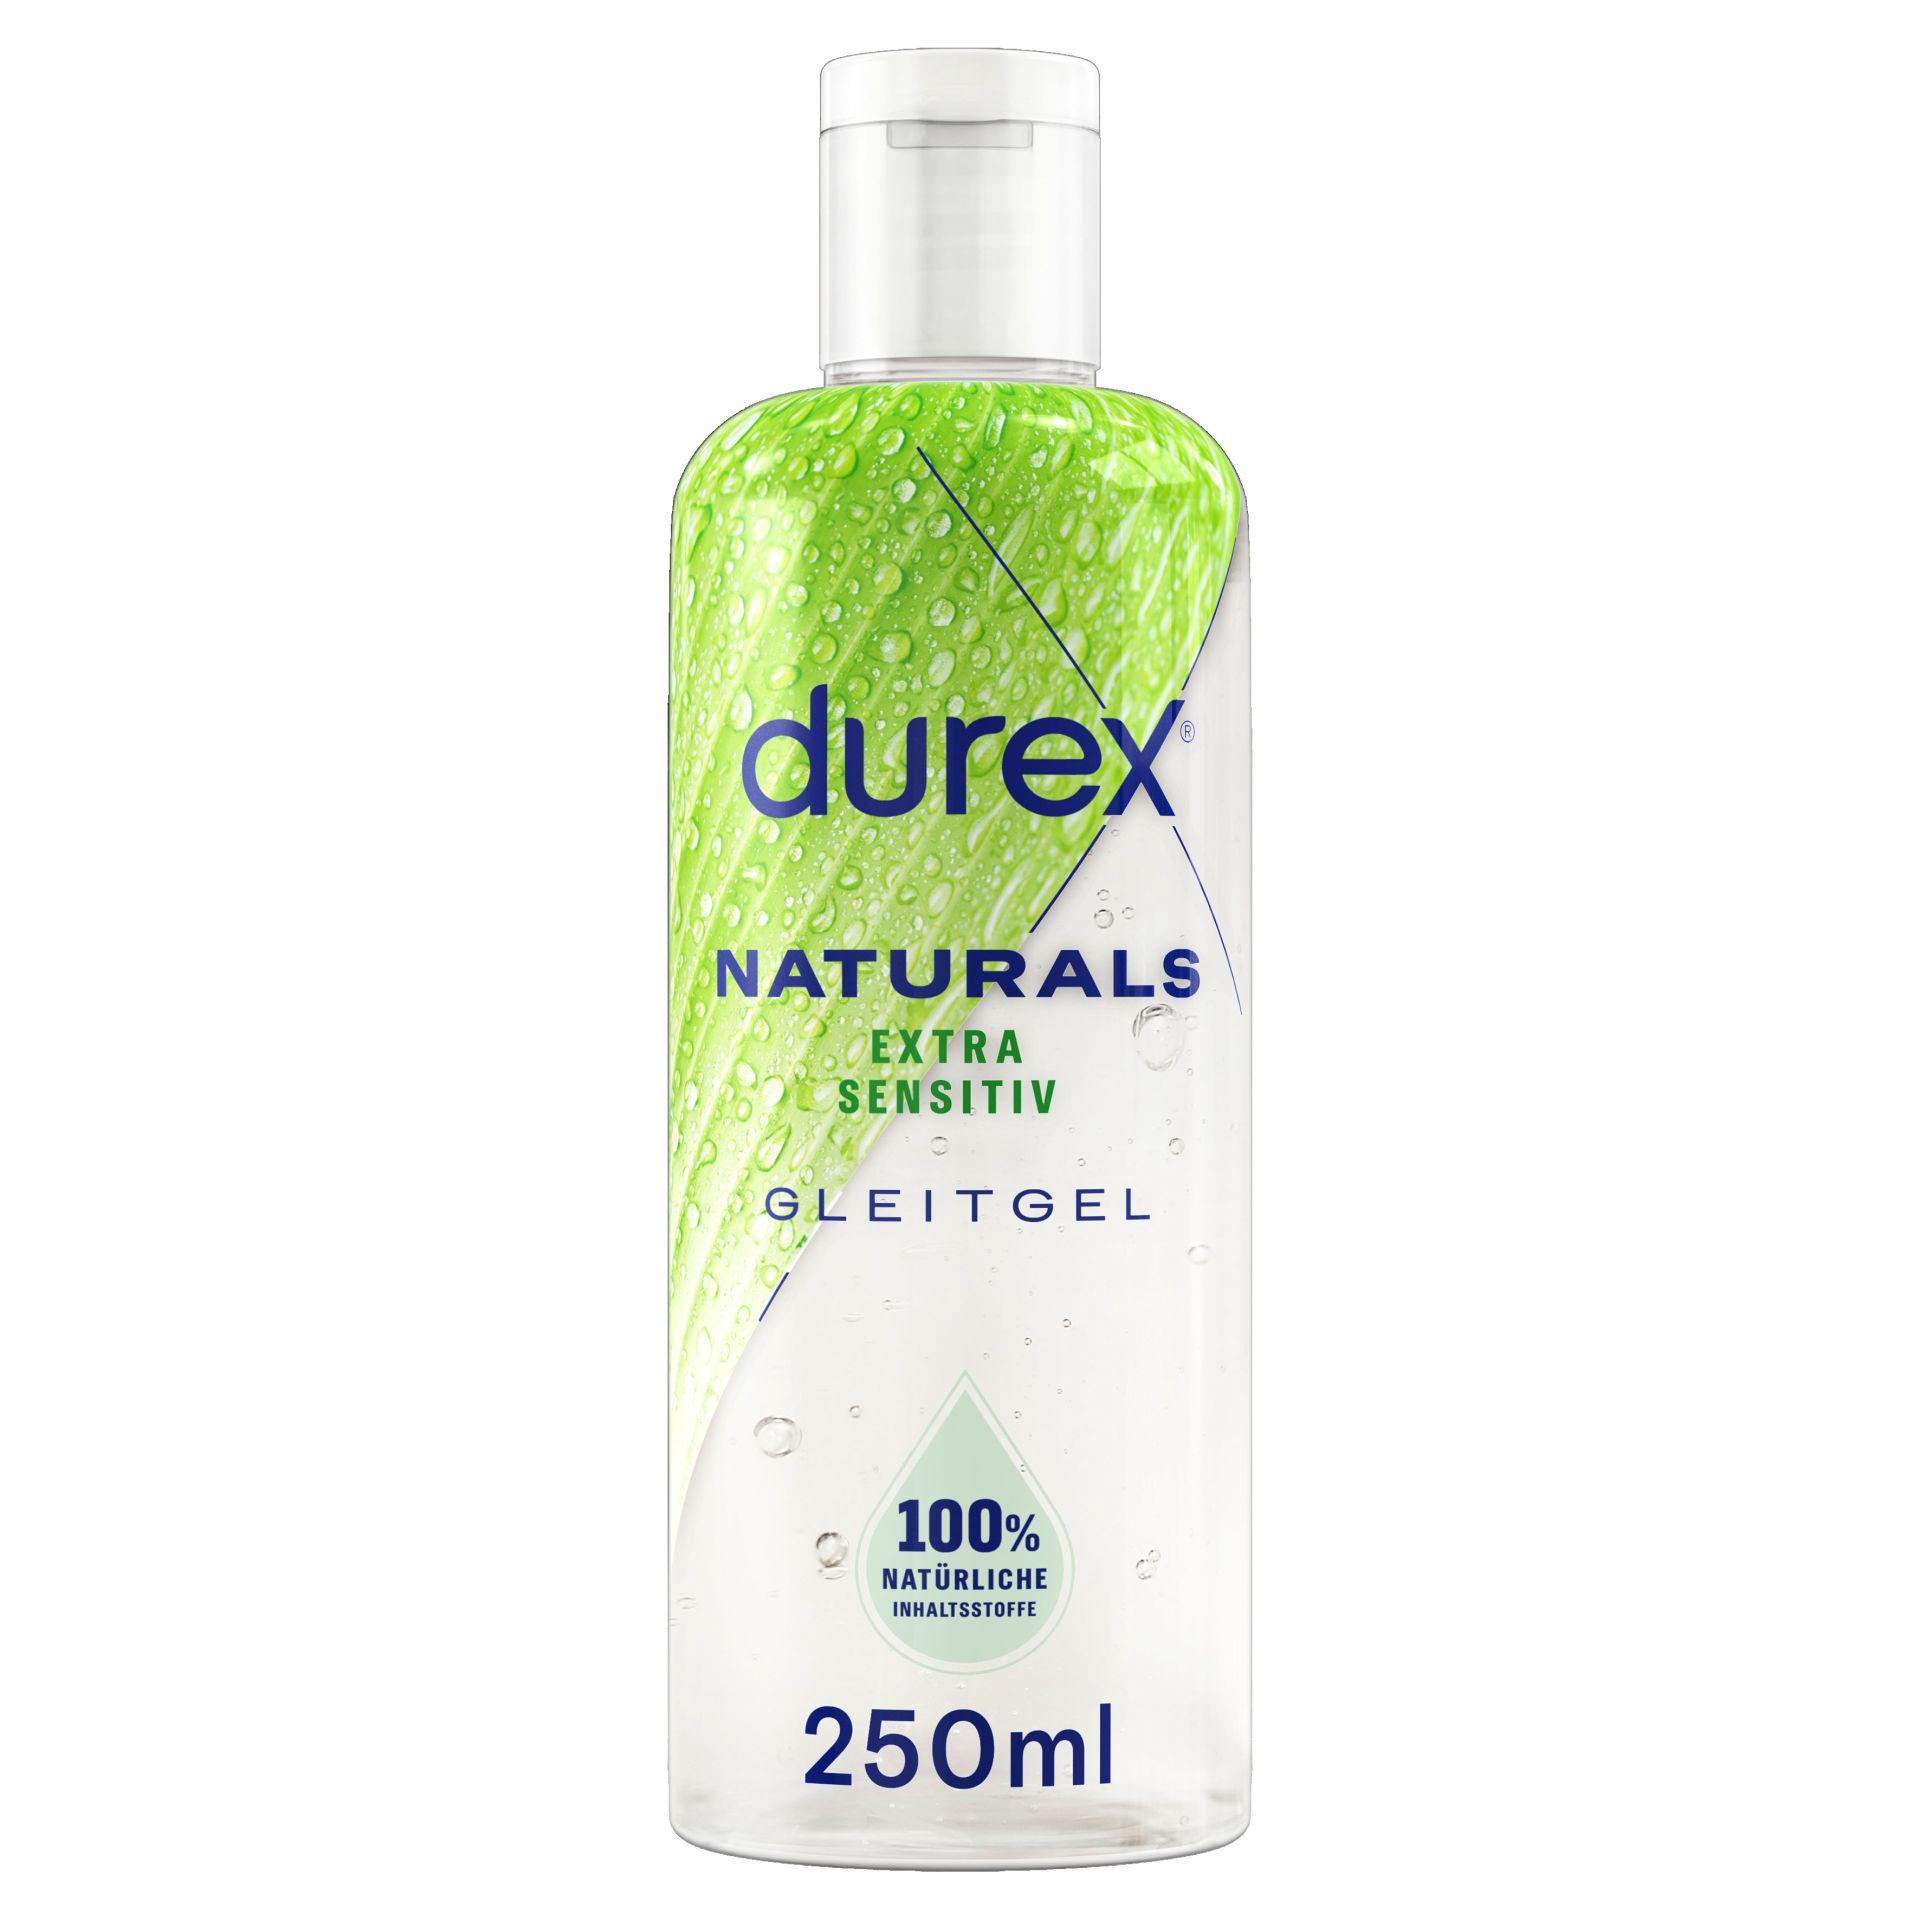 Durex Naturals Lubricant, Extra Sensitive, 250 ml